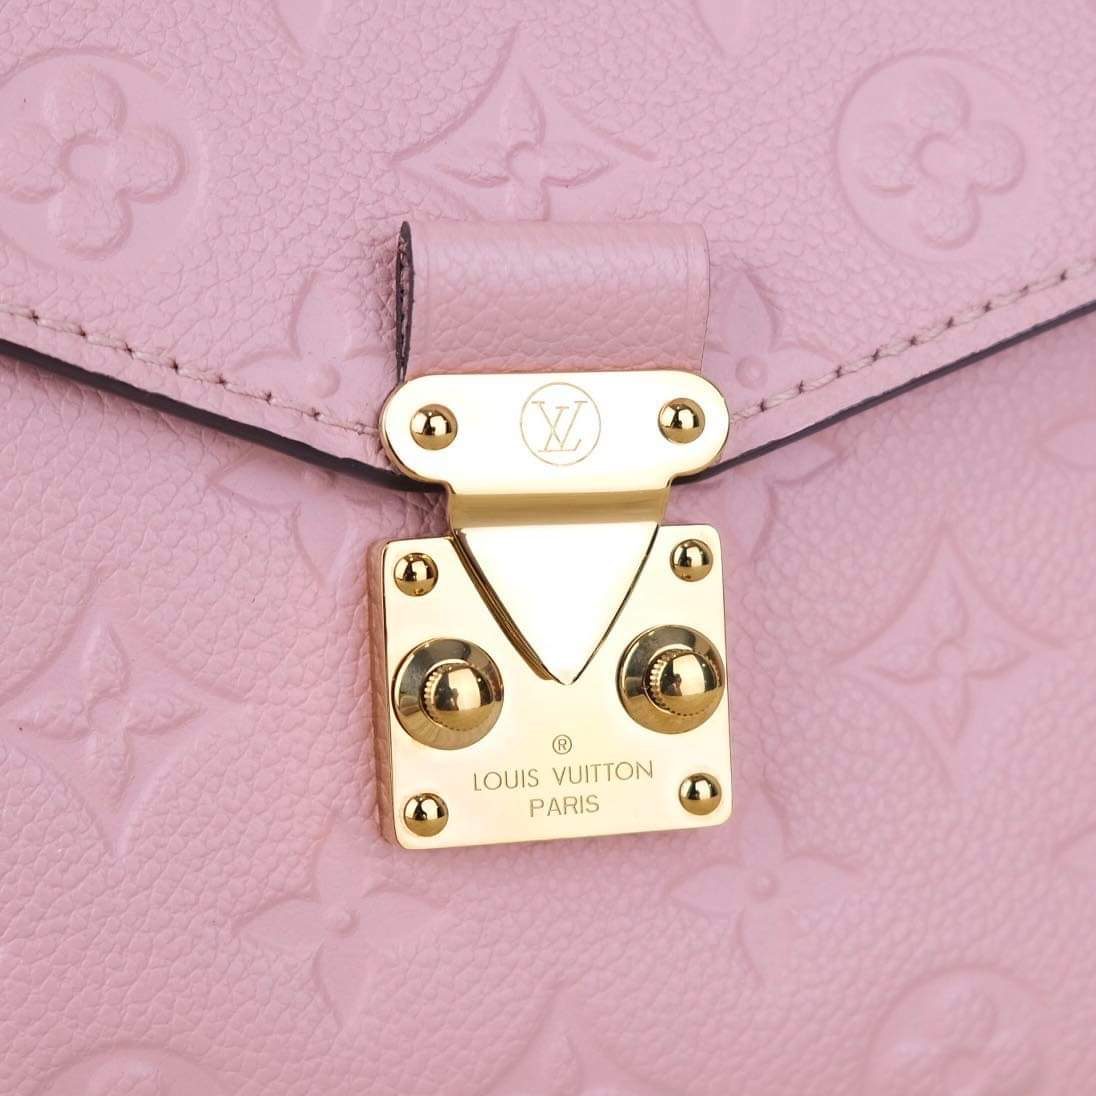 Louis Vuitton Rose Poudre Empreinte Pochette Metis - A World Of